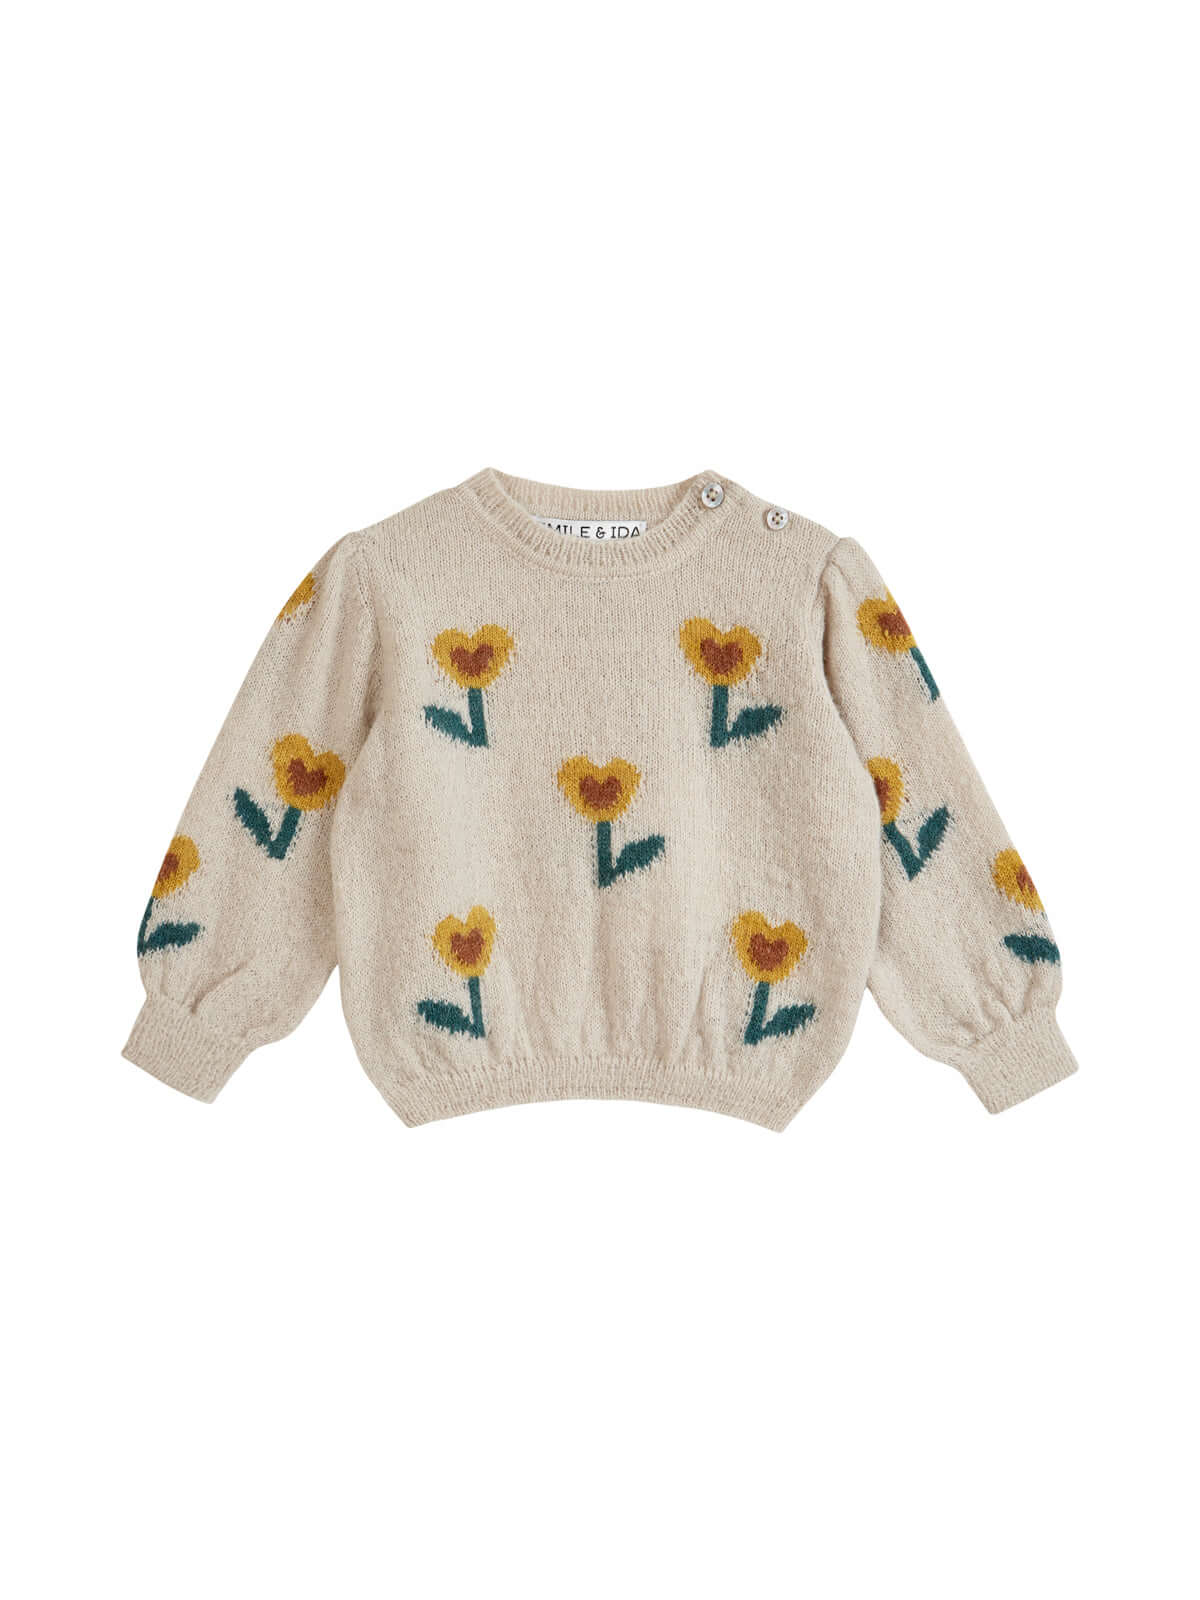 Zara - Jacquard Knit Sweater - Multicolored - Unisex